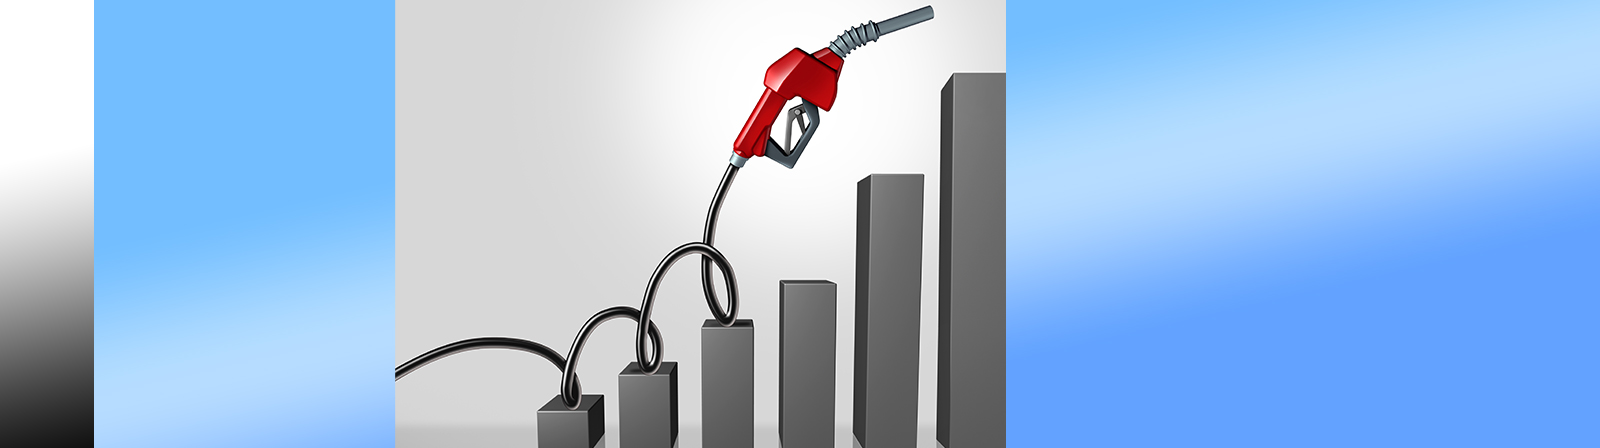 image simulating price of oil rising